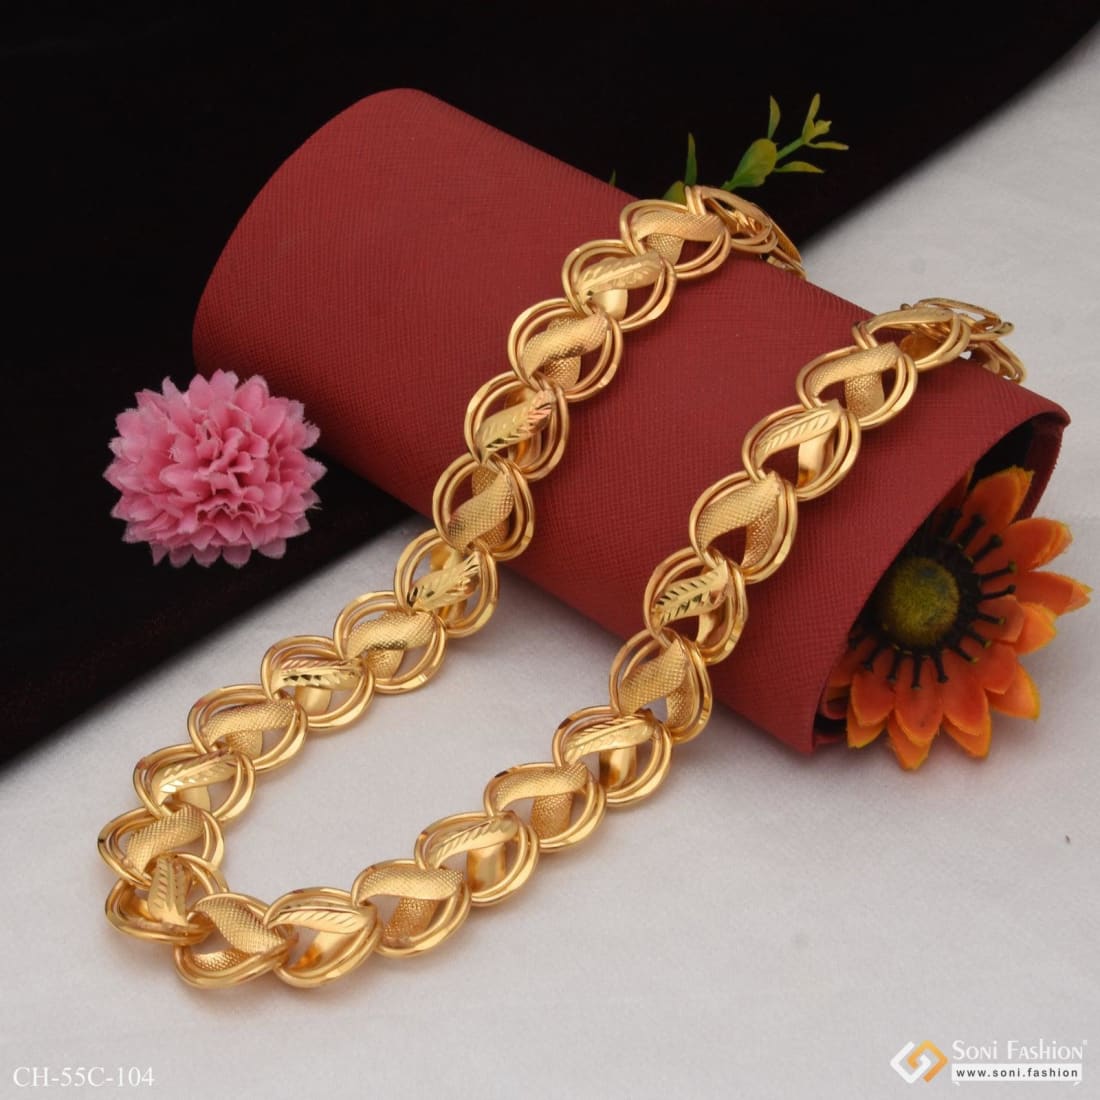 18 K Women Diamond Gold Bracelet, Weight: 30 G at Rs 400000 in Surat | ID:  2851631975873